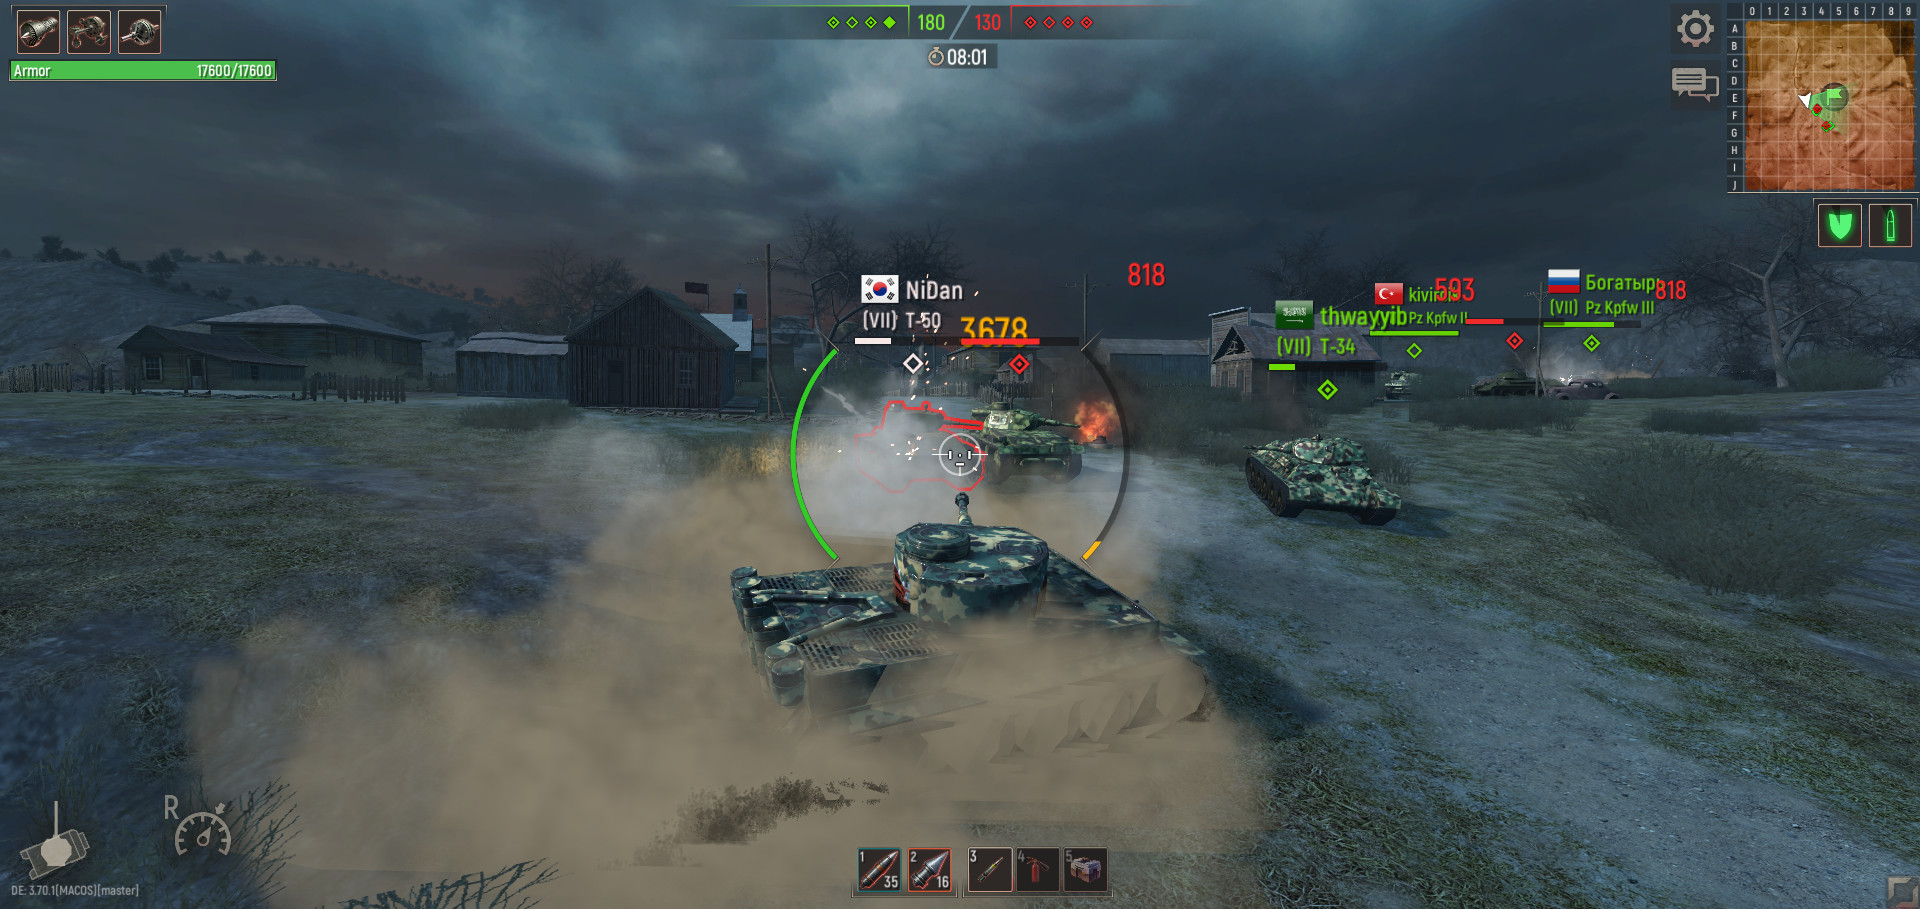 Battle Tank : City War for windows download free